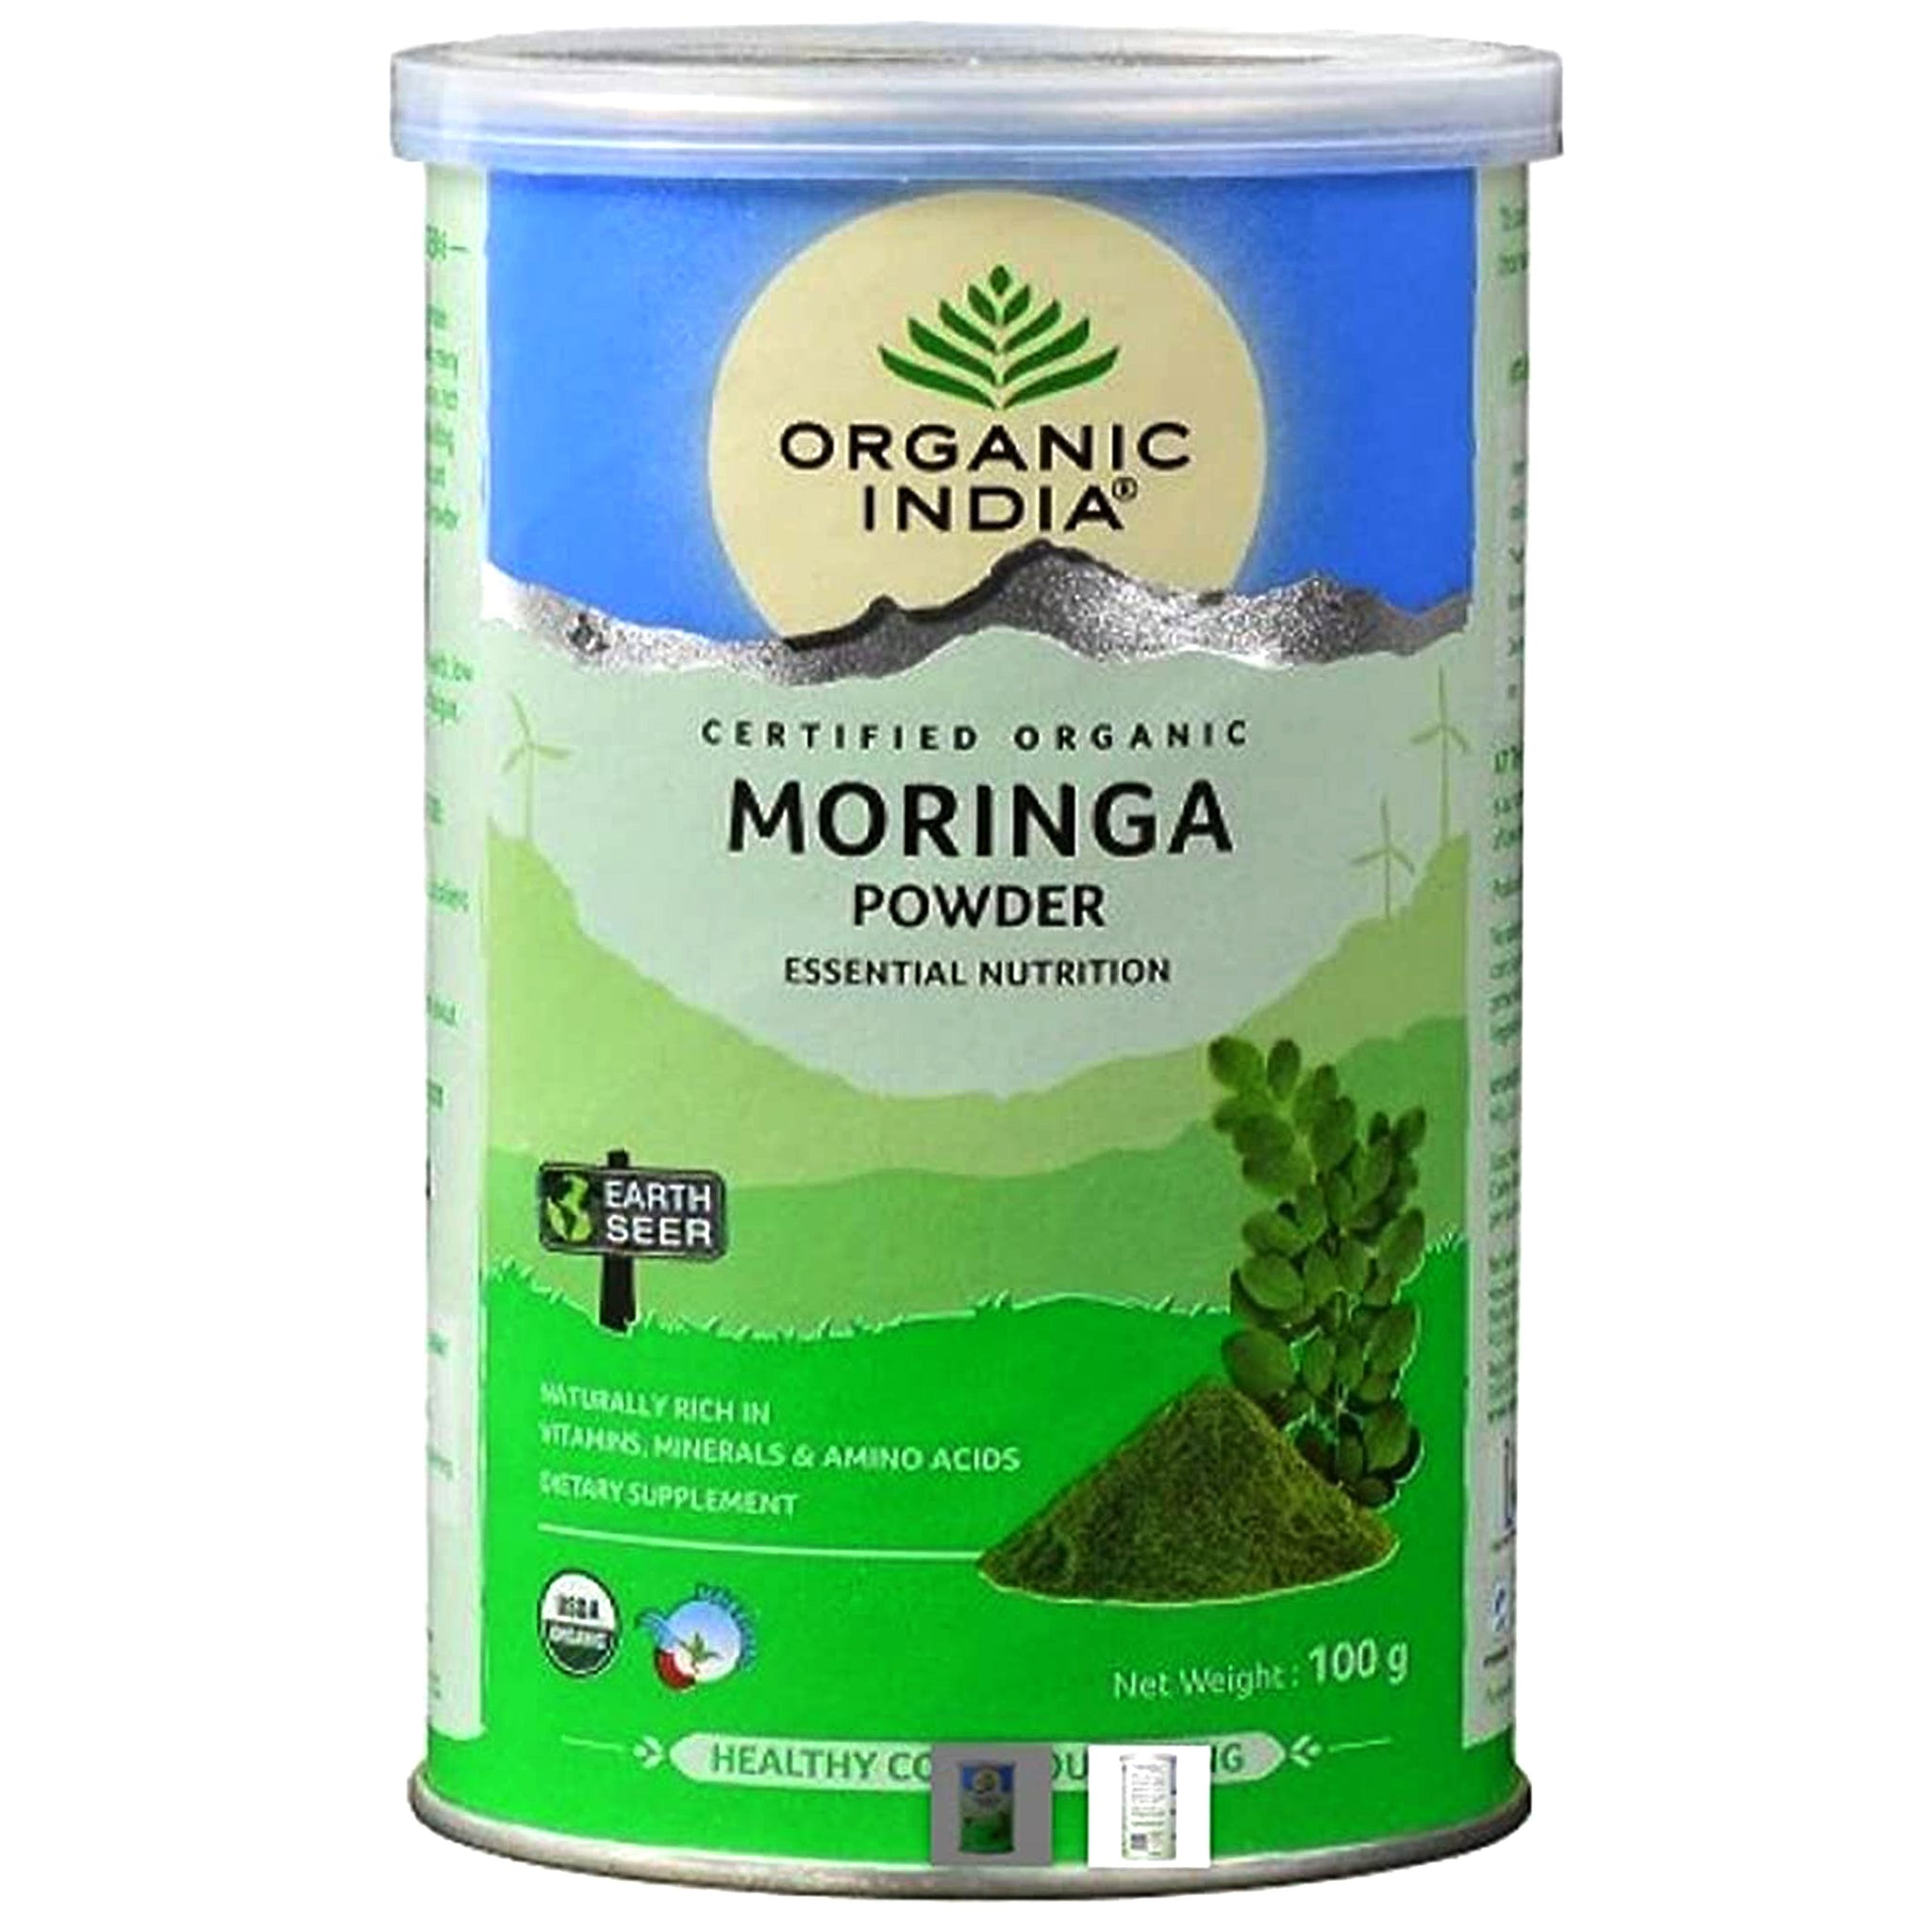 Organic India Moringa Powder 100g Value Pack of 3 